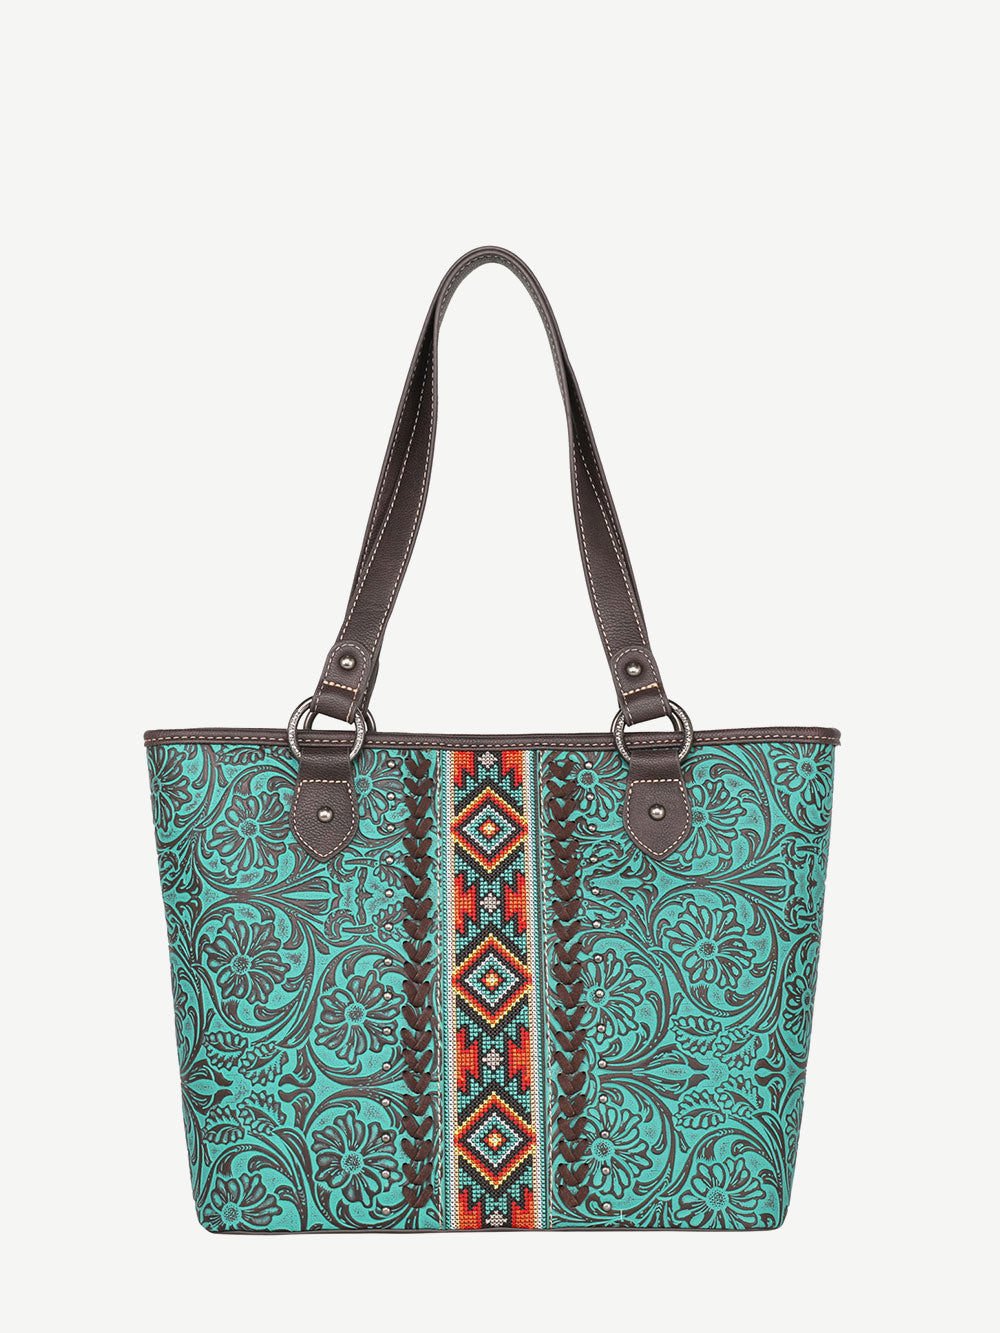 Vintage Leather Handbag Purse Tooled Floral Design with Brass Clasp/Handle  10x10 | eBay